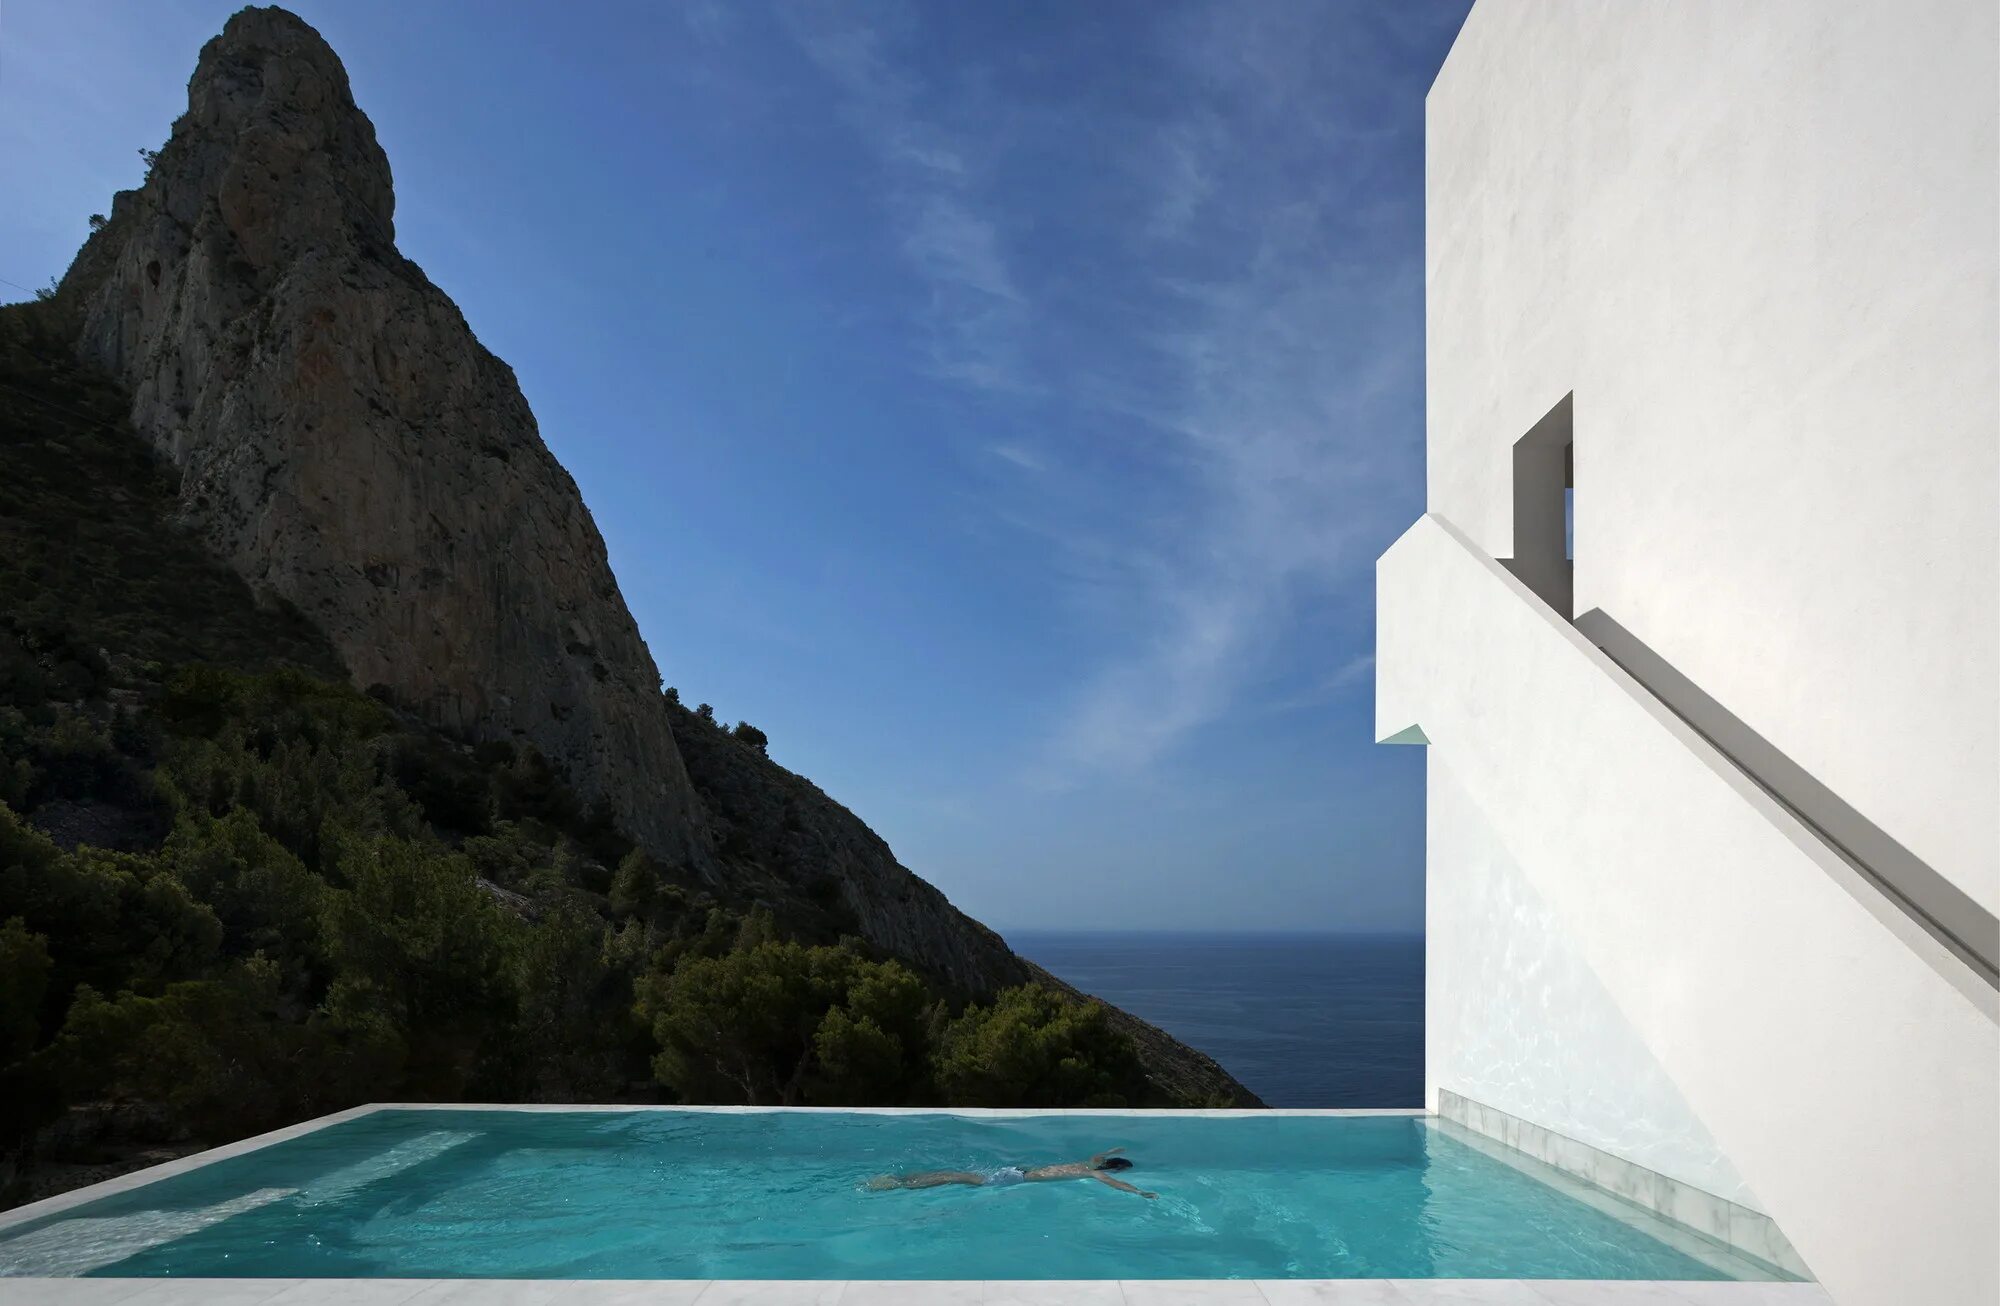 The cliff 4. Fran Silvestre дом на скале. Дом на скале (House on the Cliff) в Испании от fran Silvestre arquitectos.. Cliff House, Кальпе, Испания. Дом на Утёсе (Cliff House).